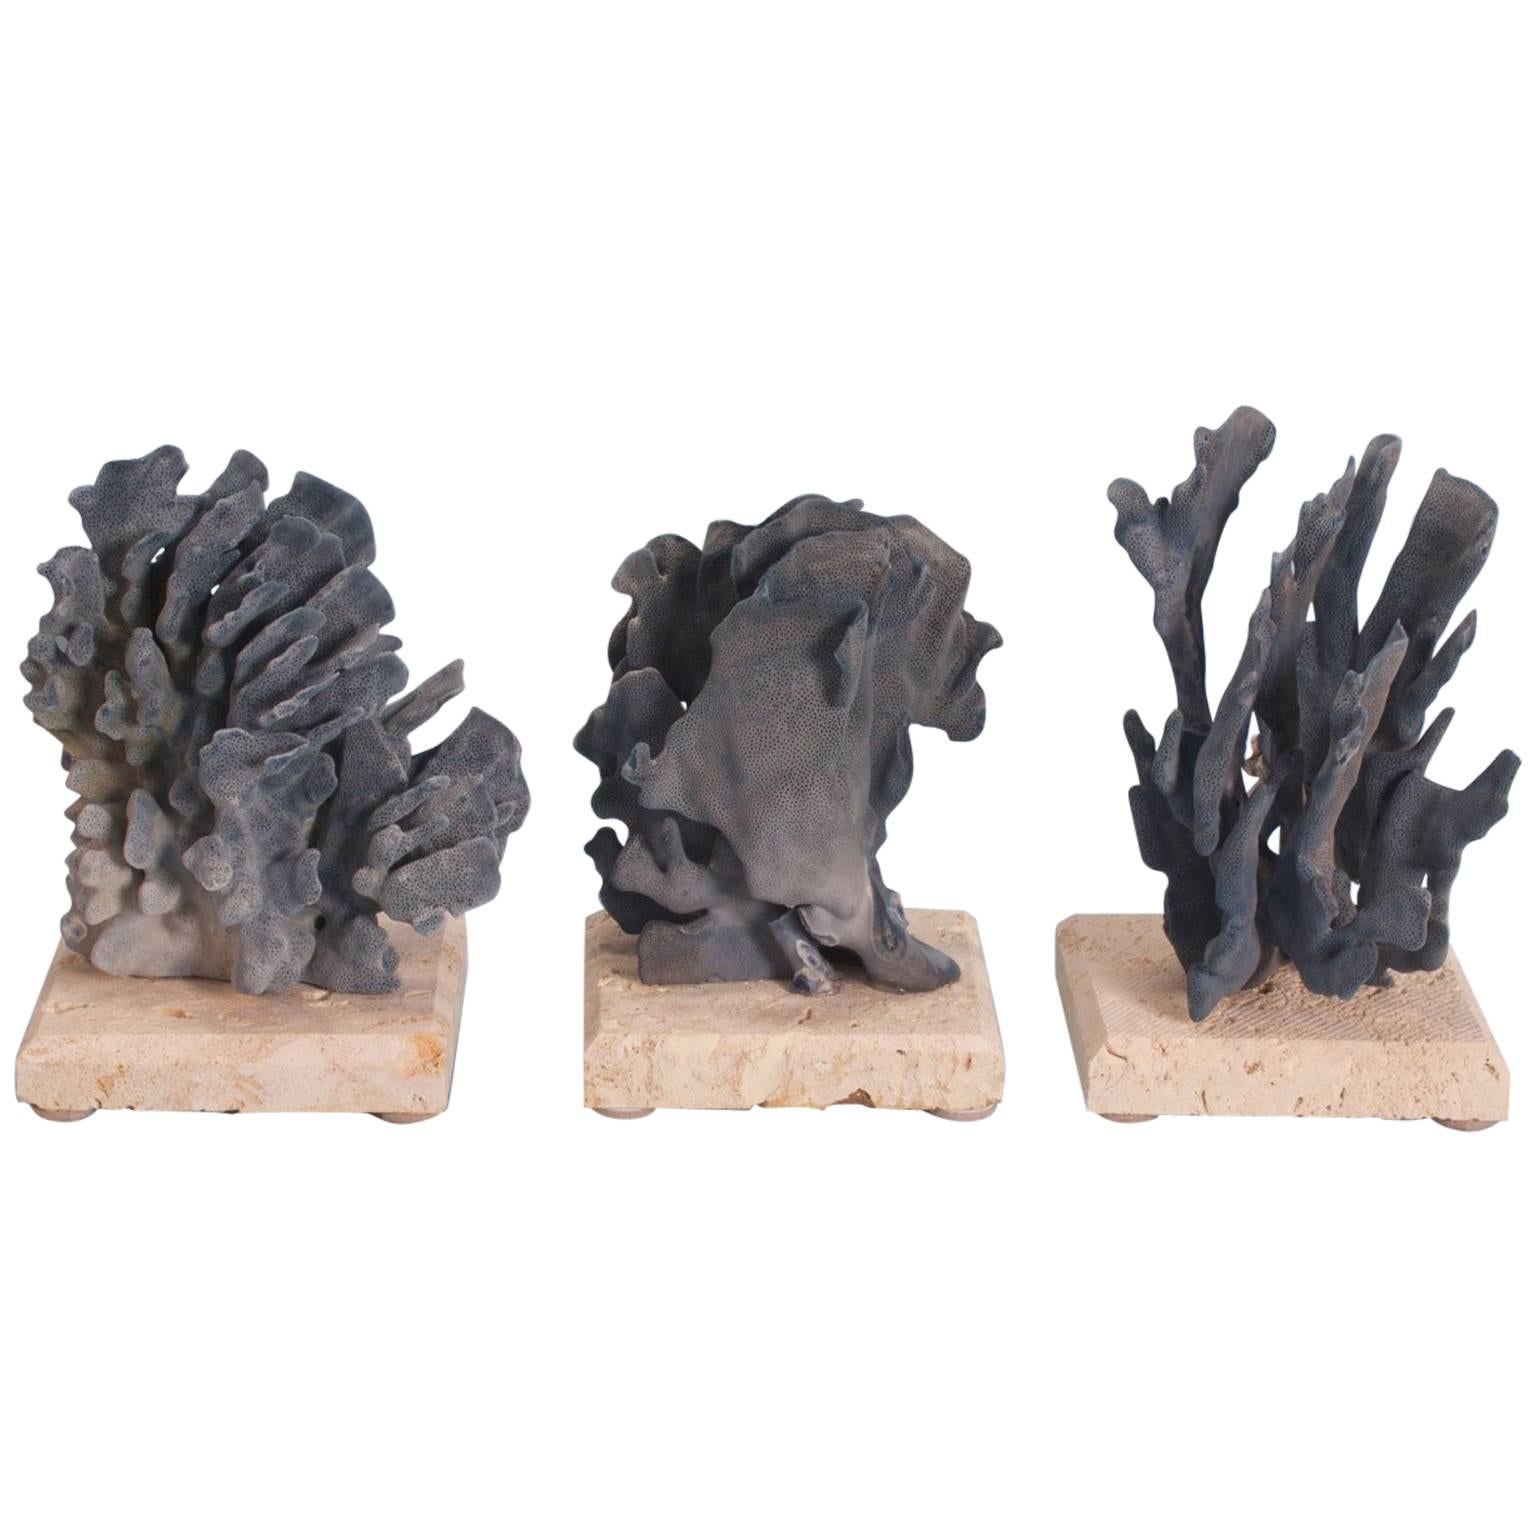 Trois sculptures organiques inspirantes en corail bleu, vendues individuellement